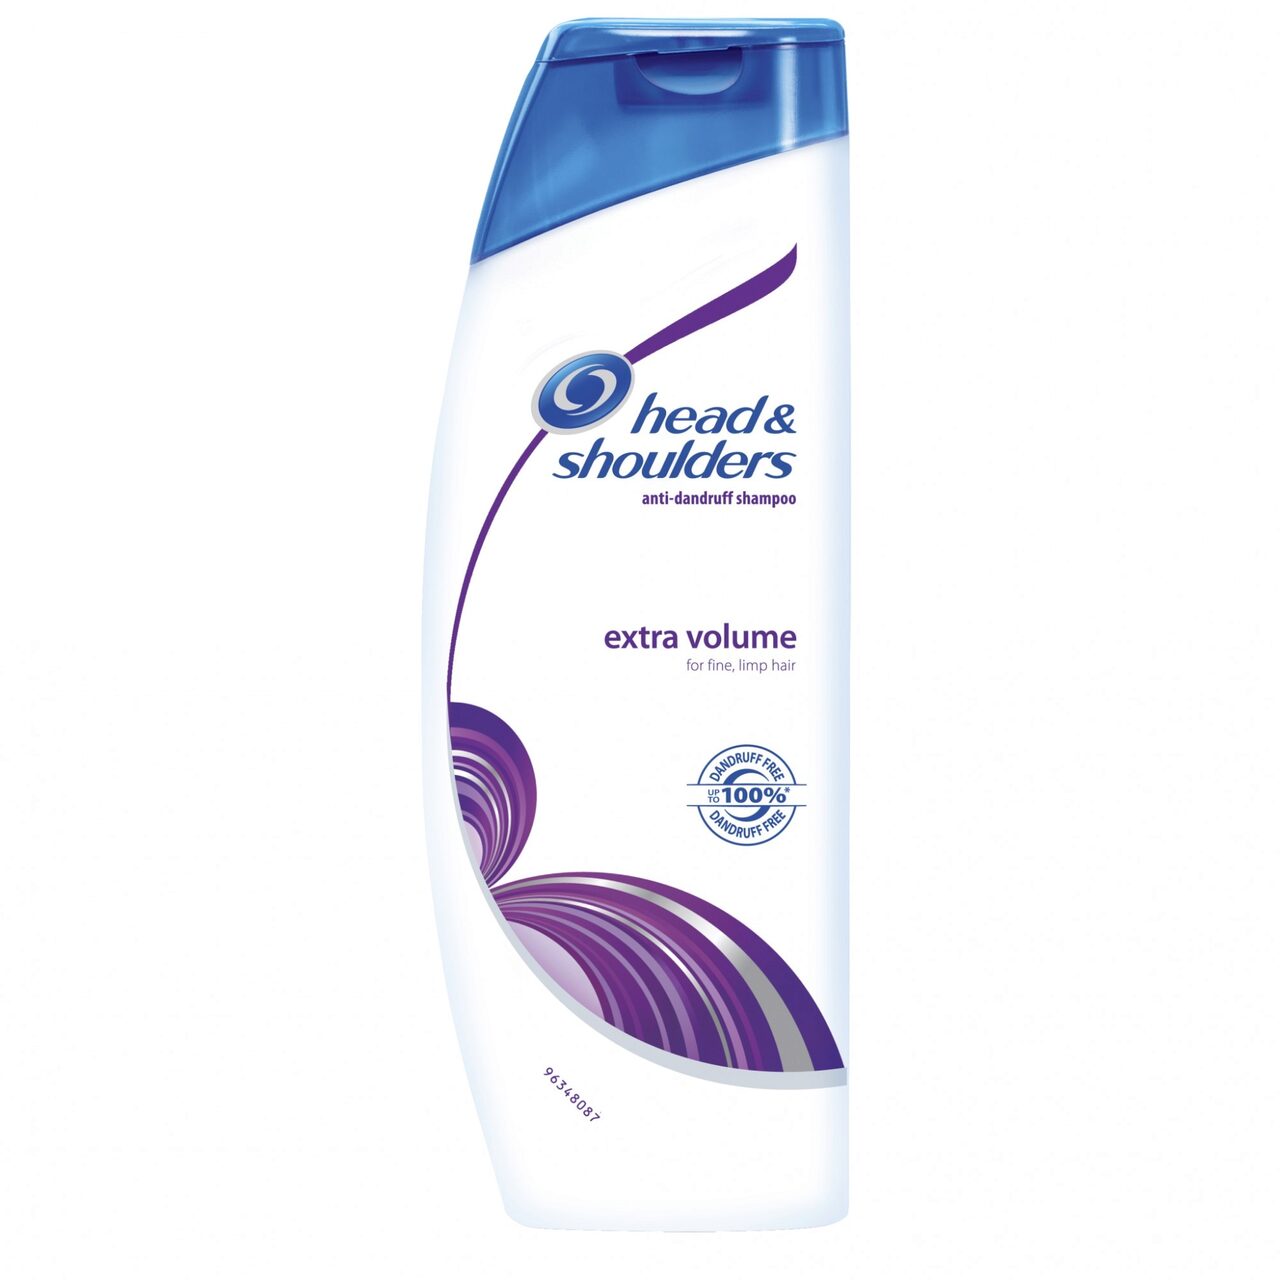 Antimatreata - Head & Shoulders, șampon extra volum, 200ml, Procter & Gamble, sinapis.ro